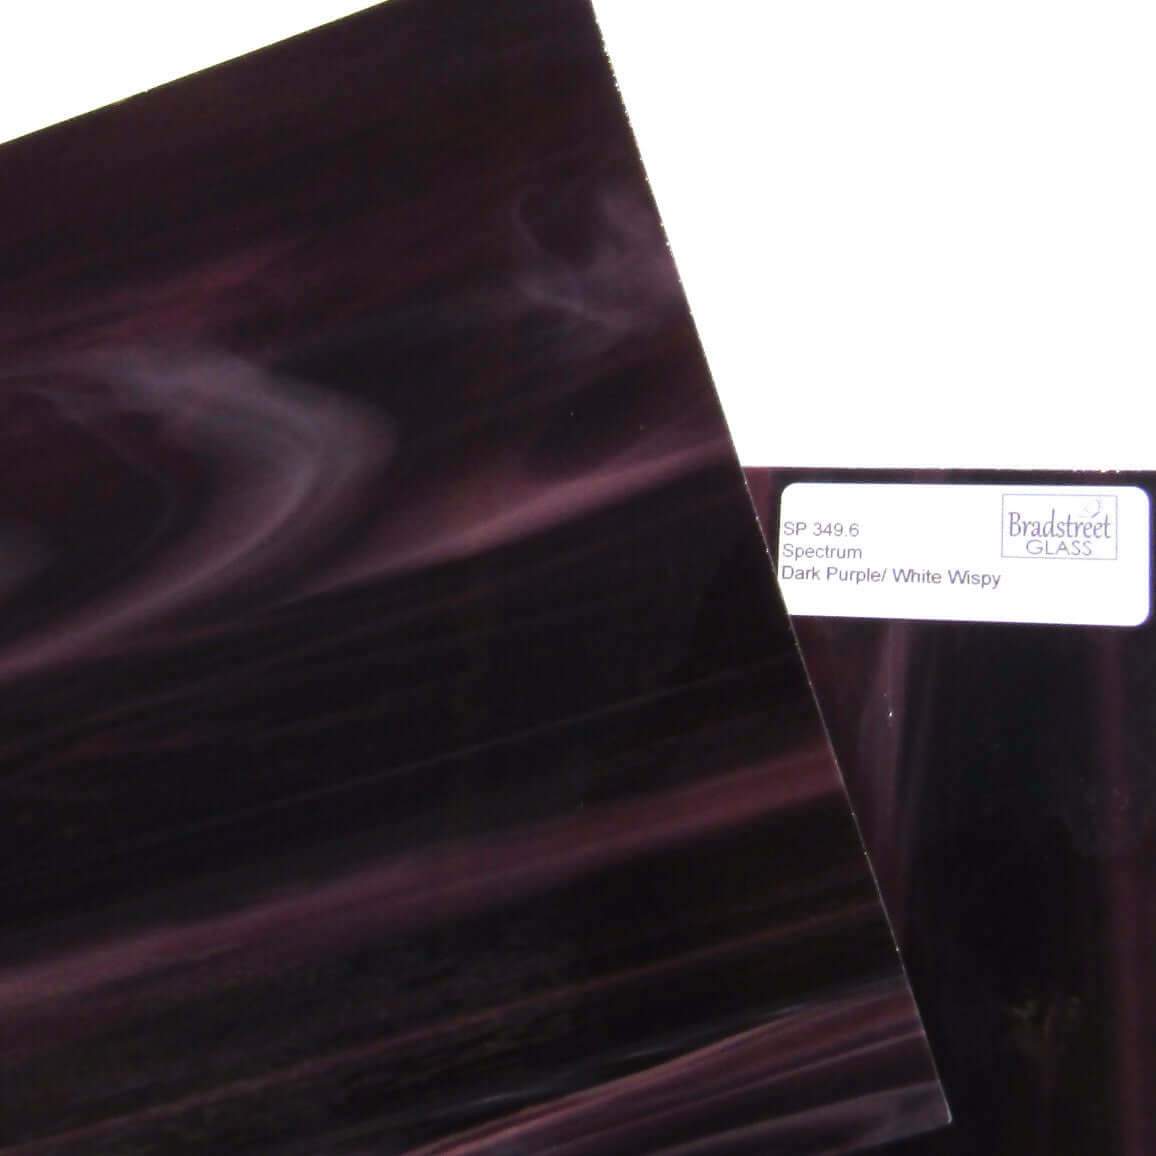 Spectrum SP 349.6 Stained Glass Sheet Dark Purple and White Wispy